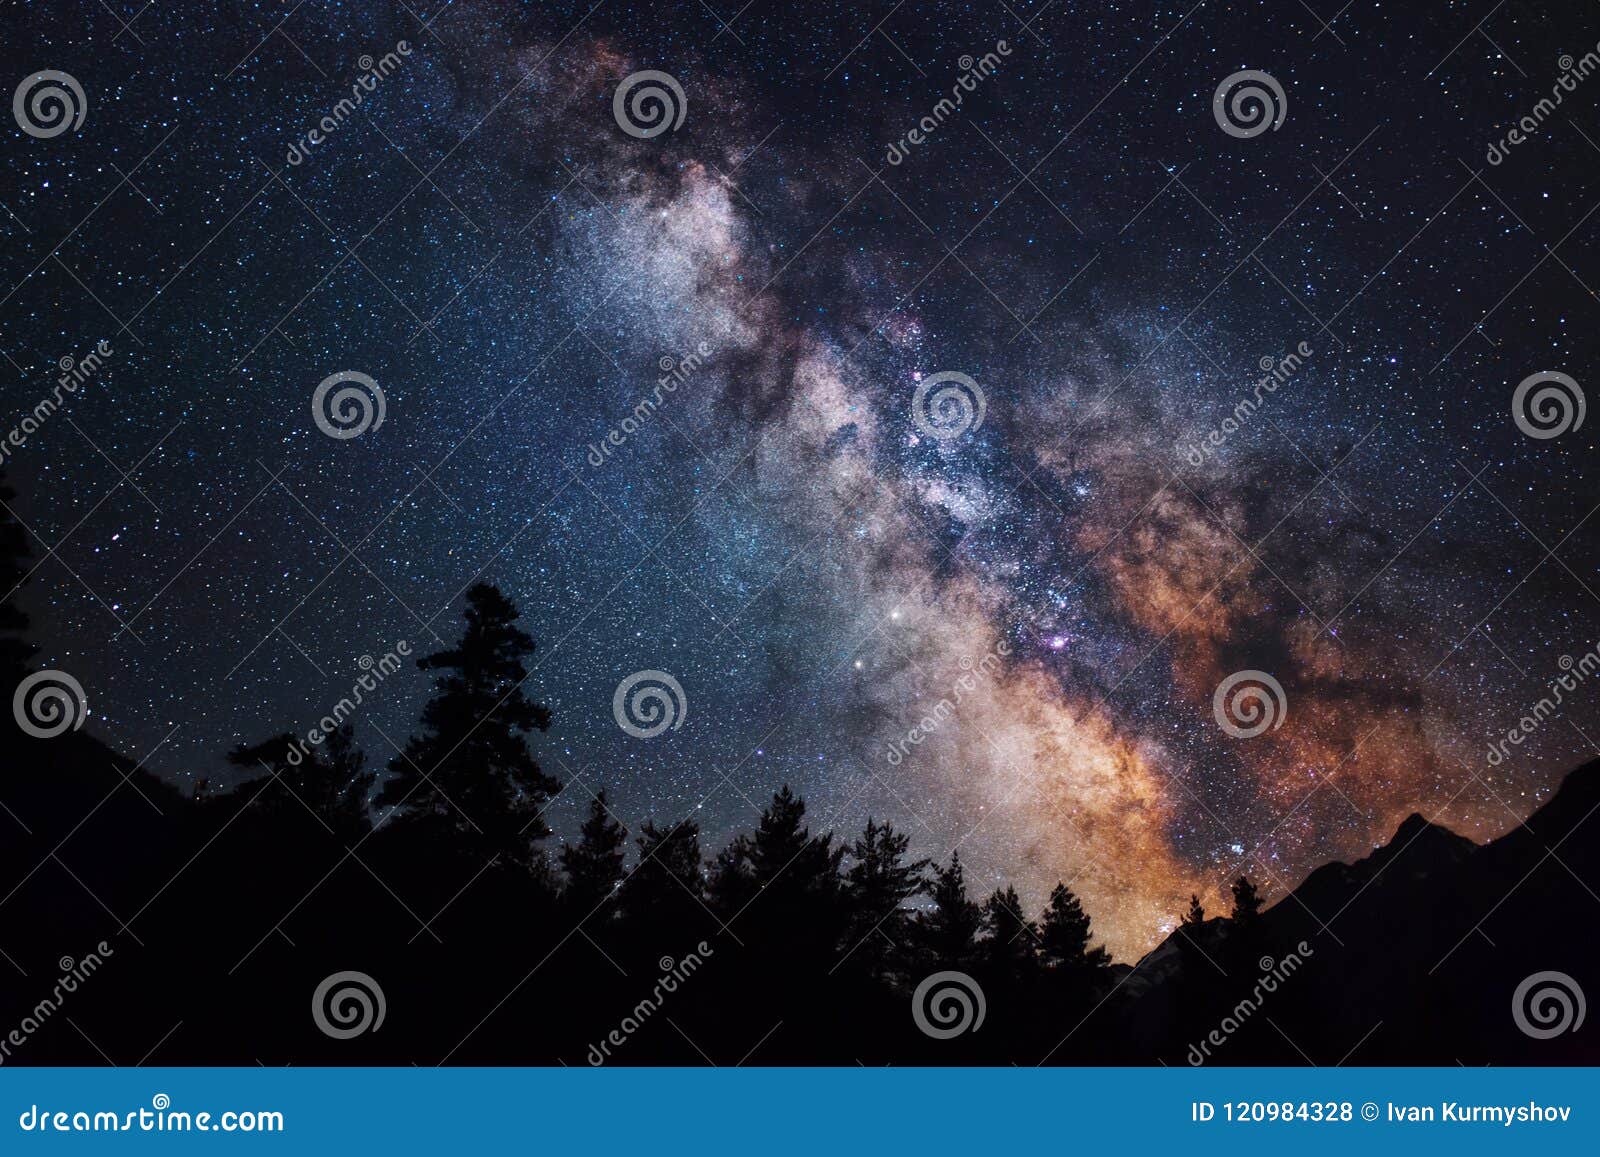 astrophotography of milky way galaxy